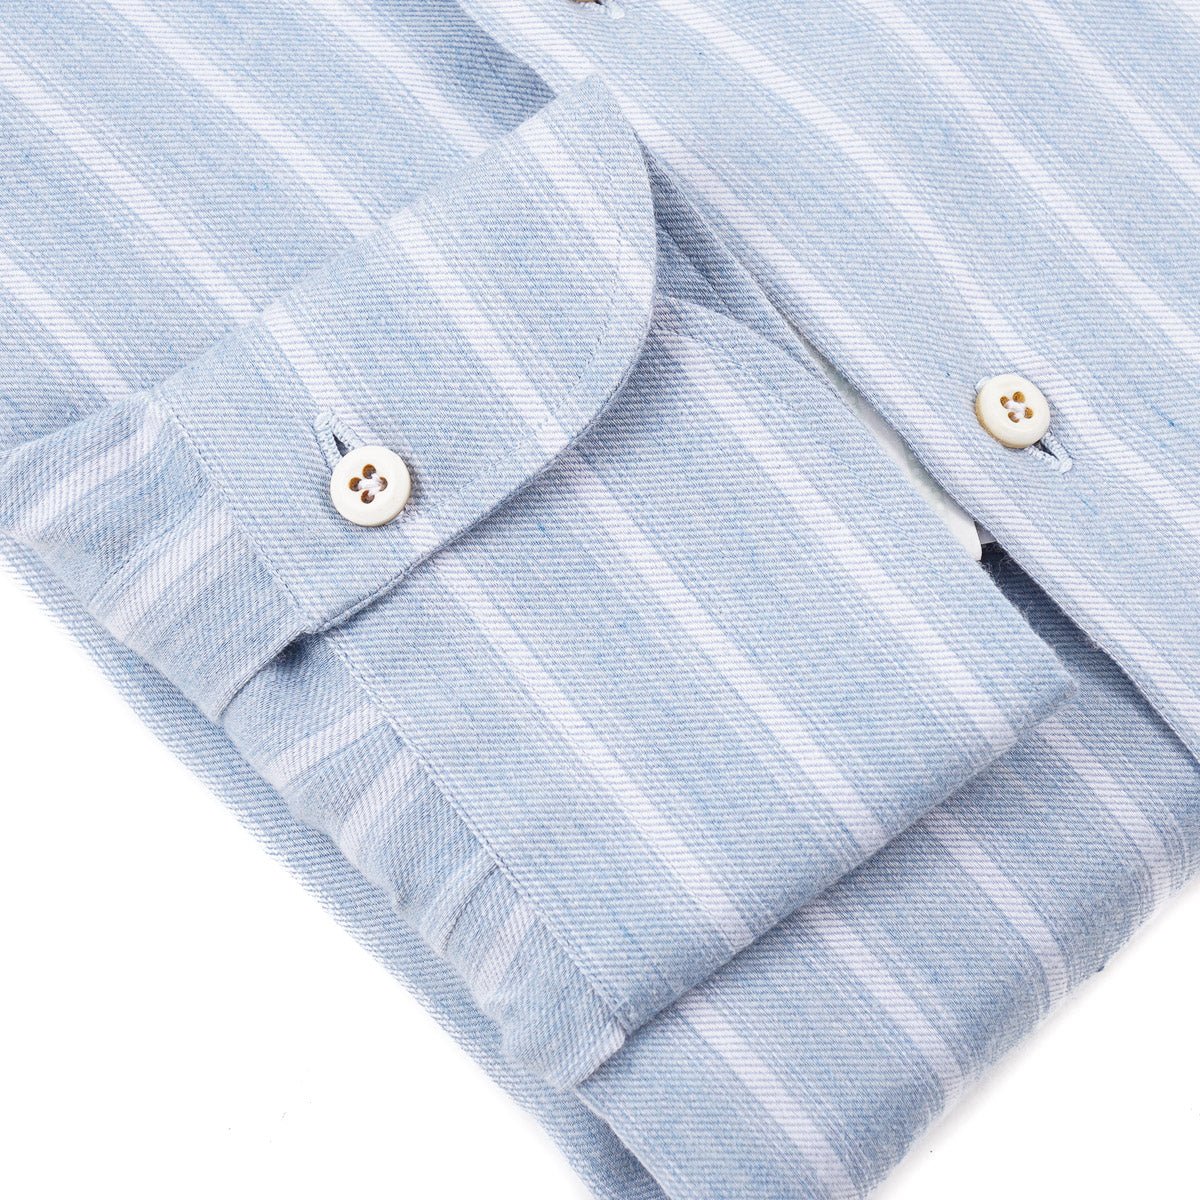 Finamore Soft Cashmere and Cotton Shirt - Top Shelf Apparel